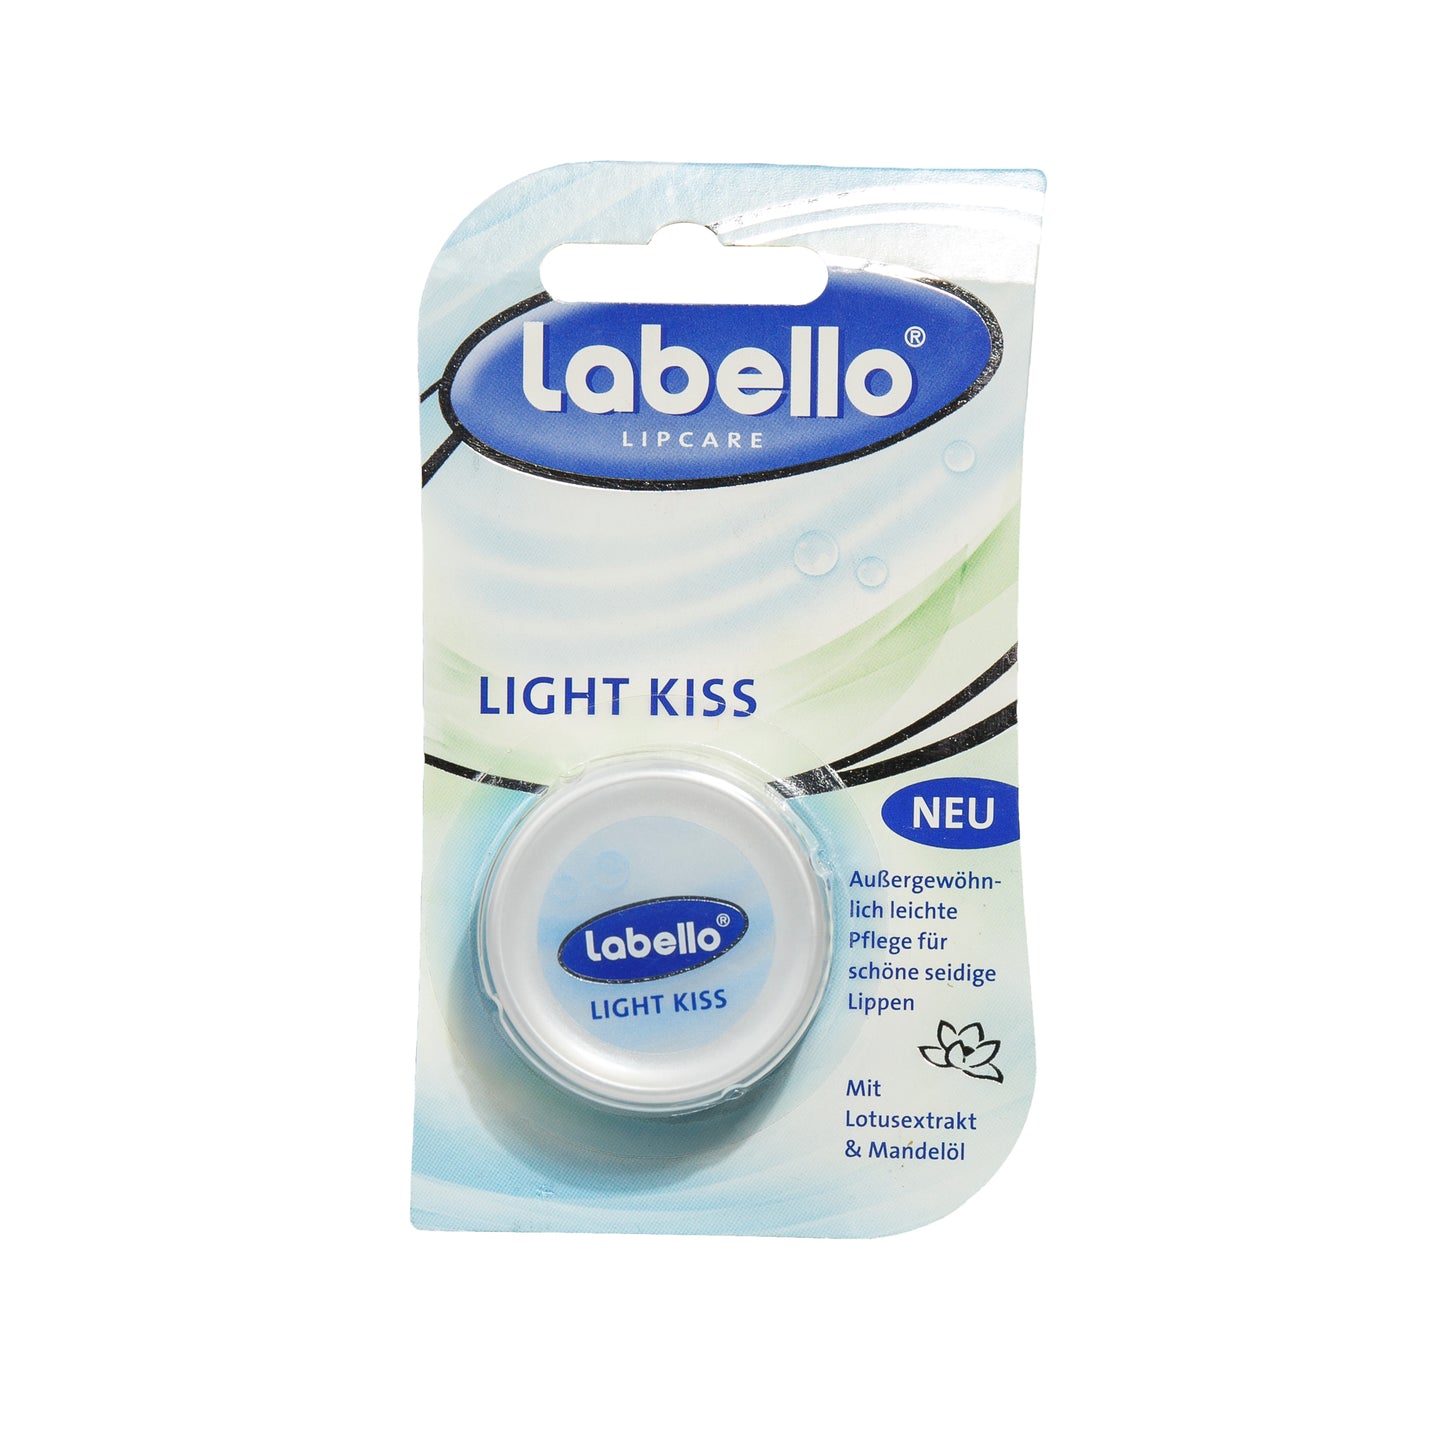 Primary Image of Light Kiss Lip Balm